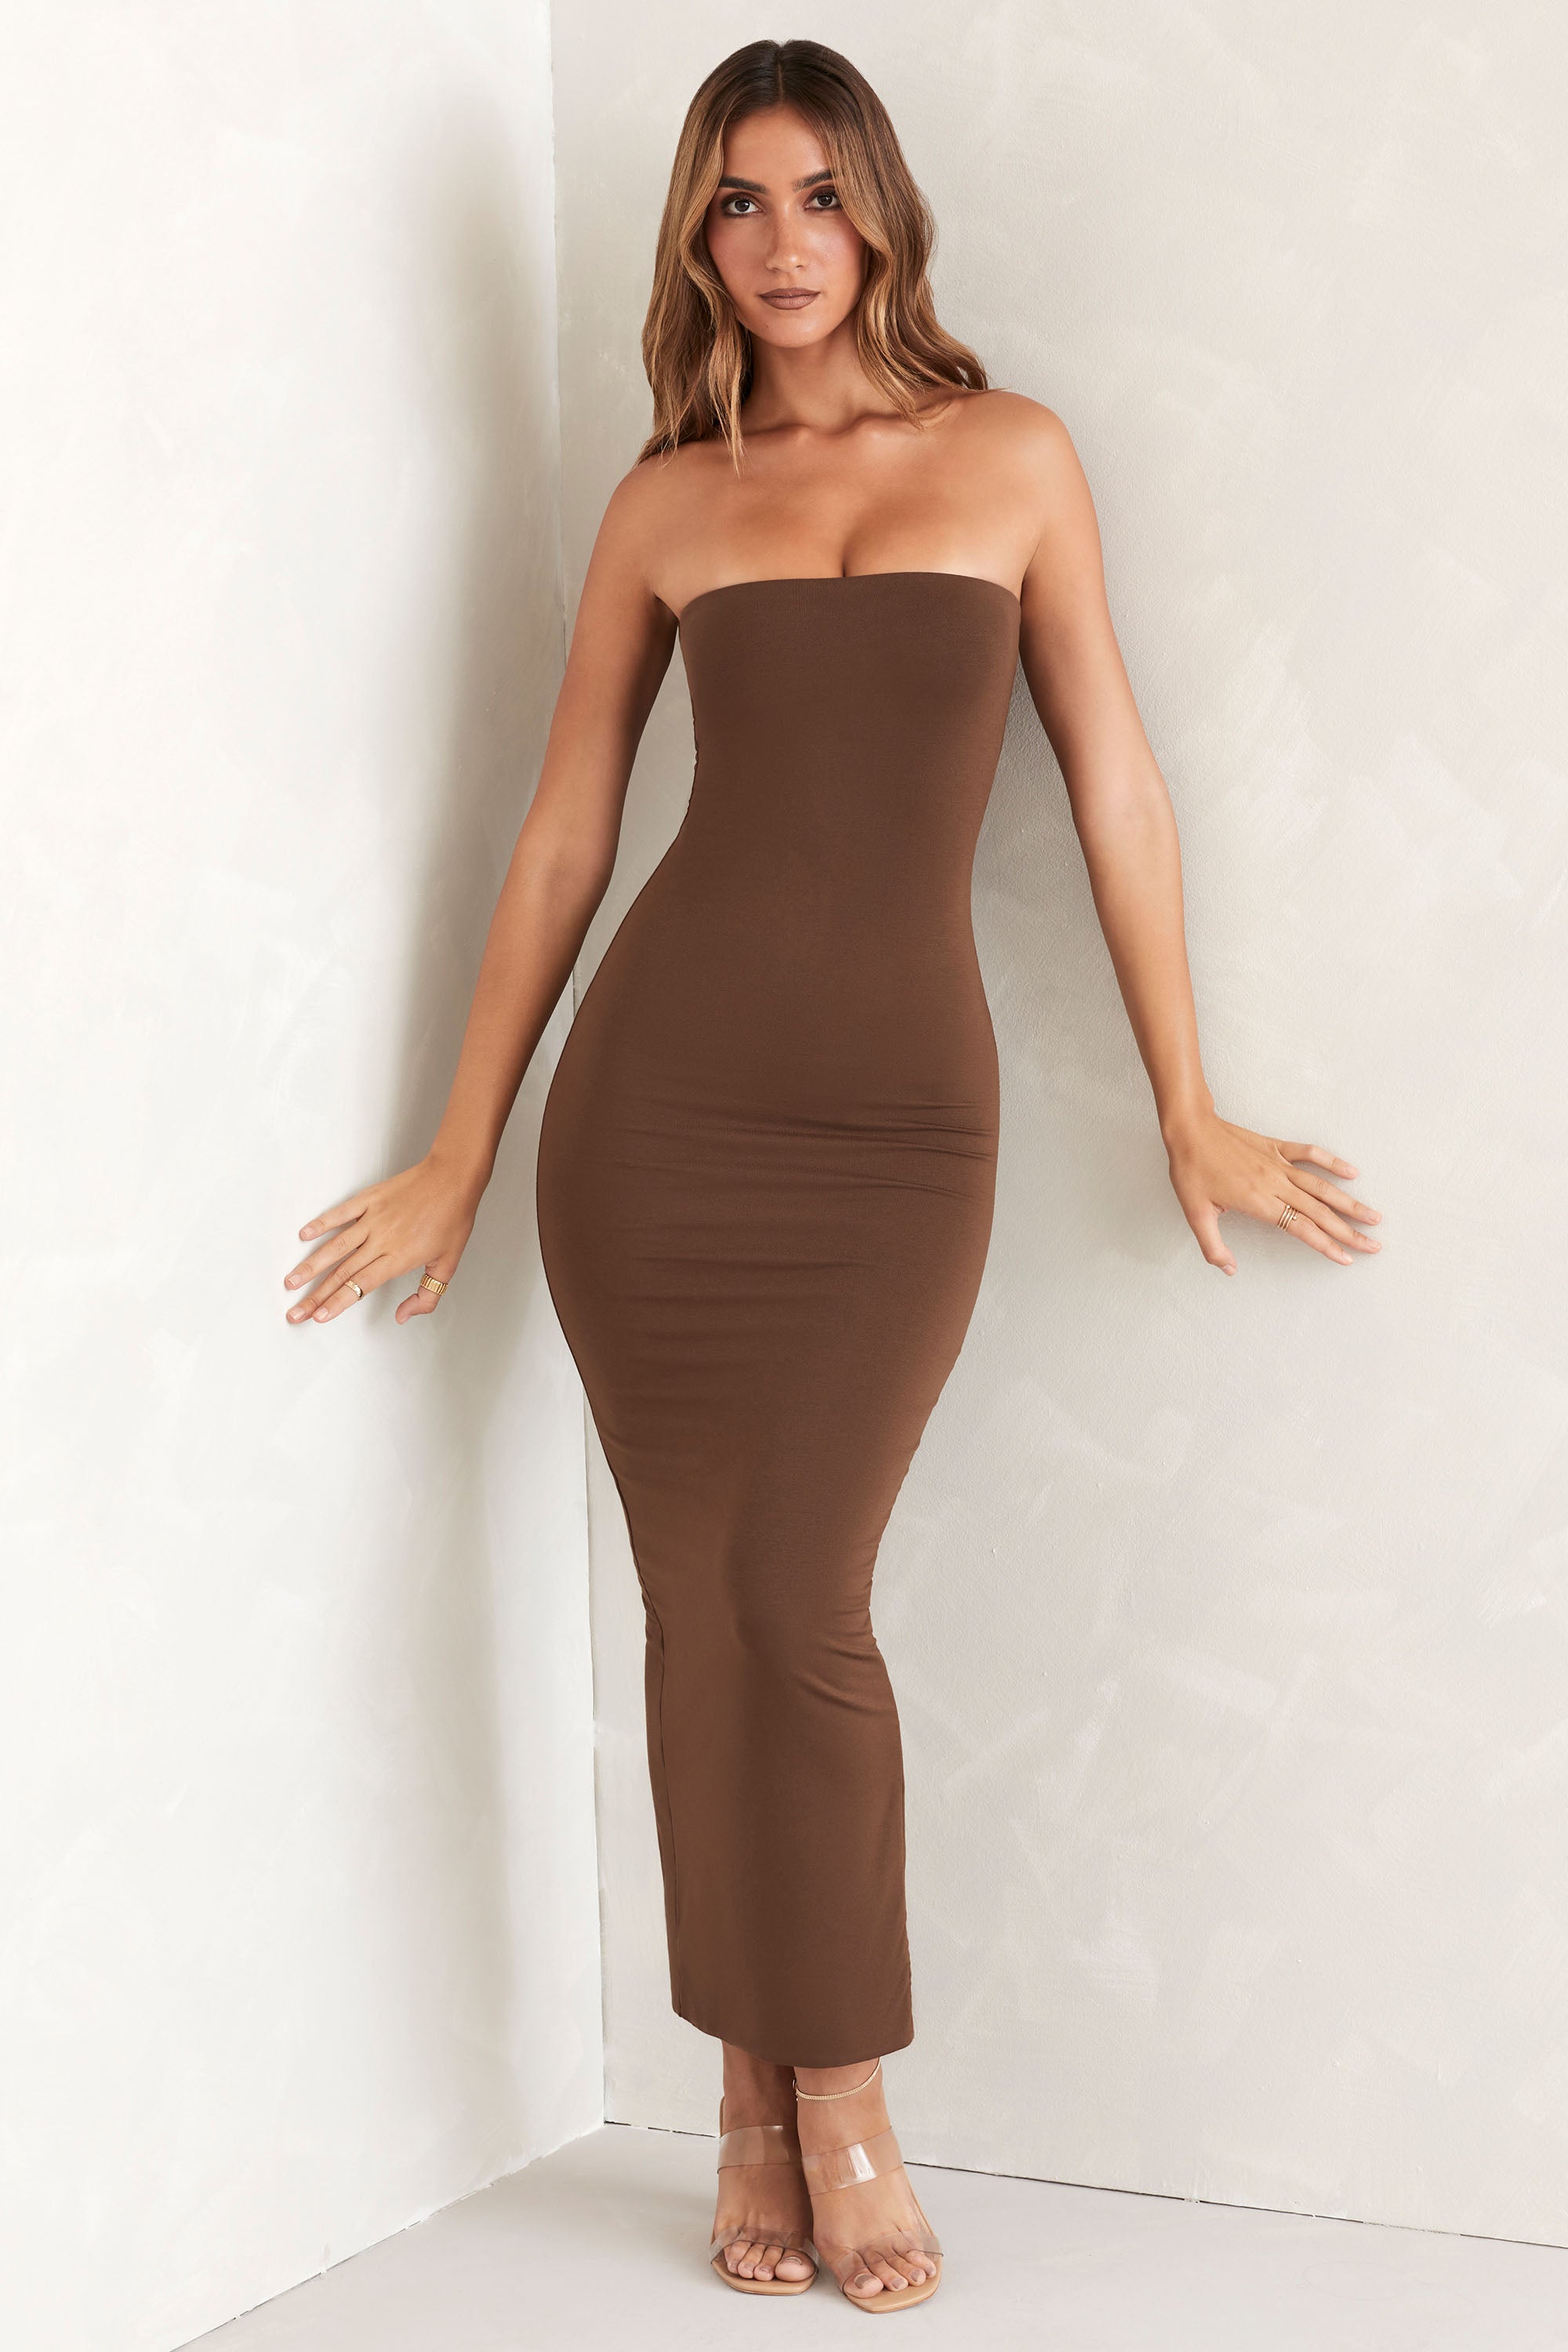 brown strapless dress